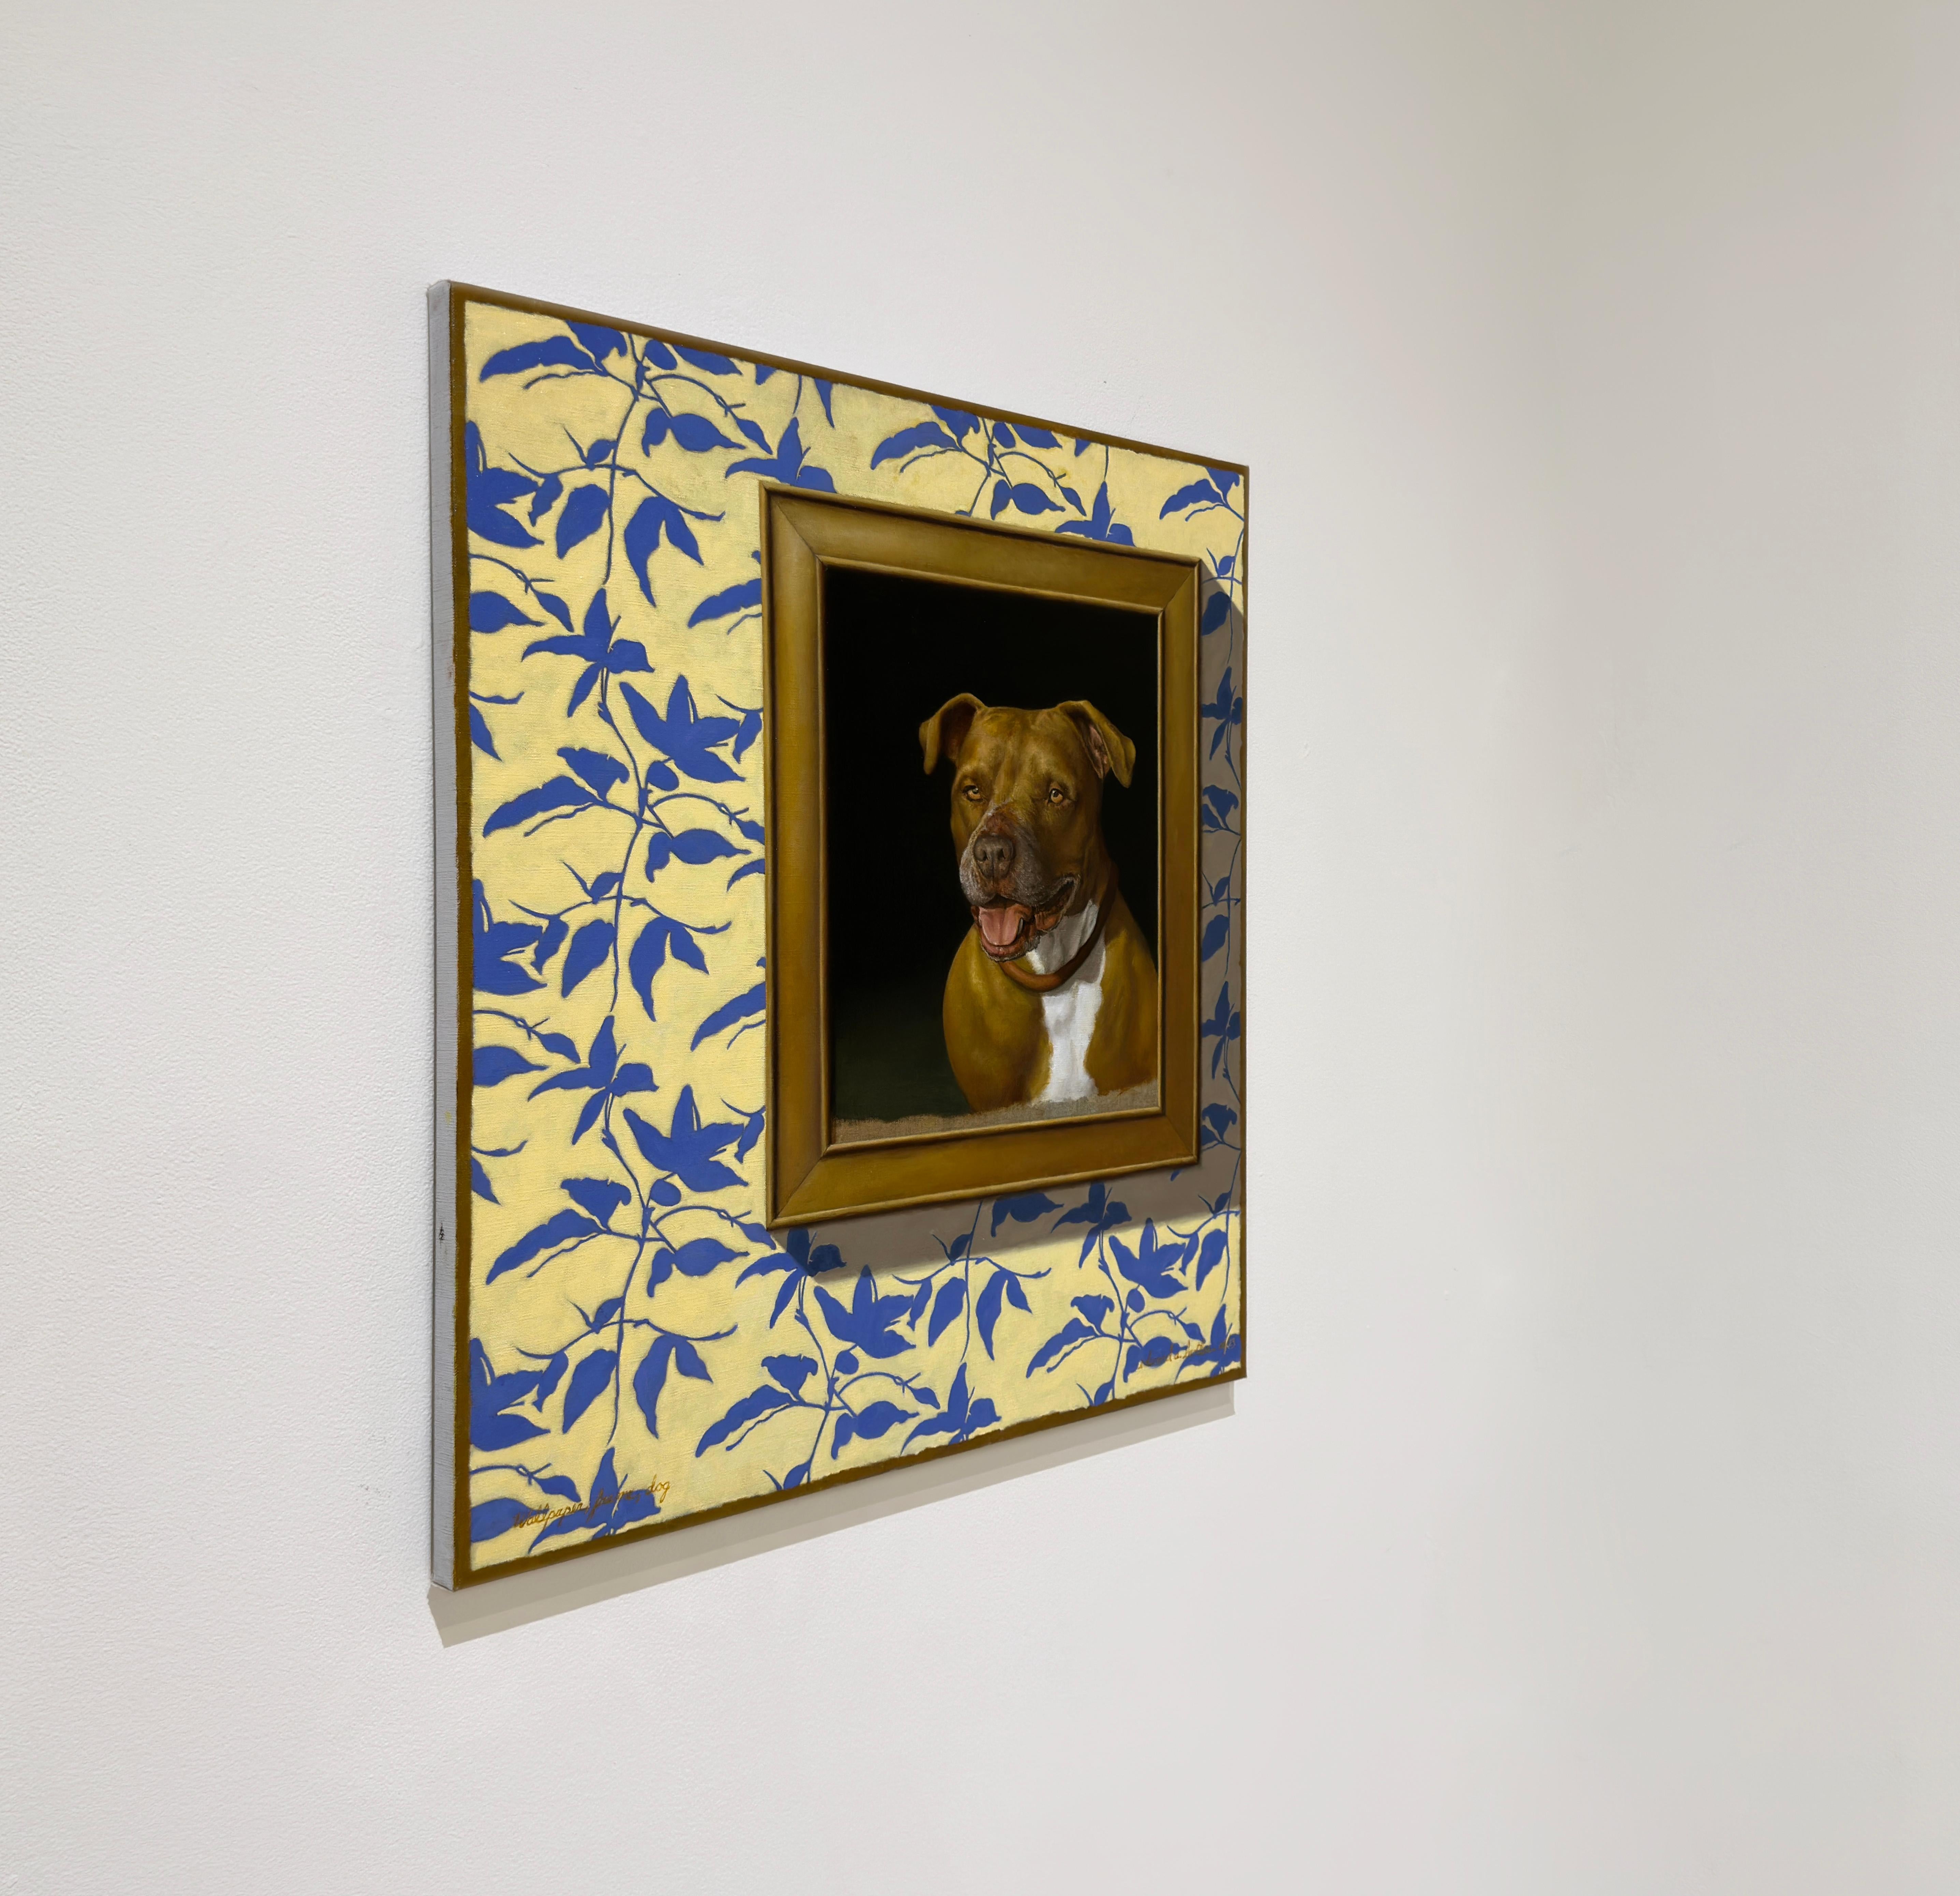 WALLPAPER, FRAME, DOG - Réalisme / Humor / Pitbull - Contemporain Painting par Edward Butler